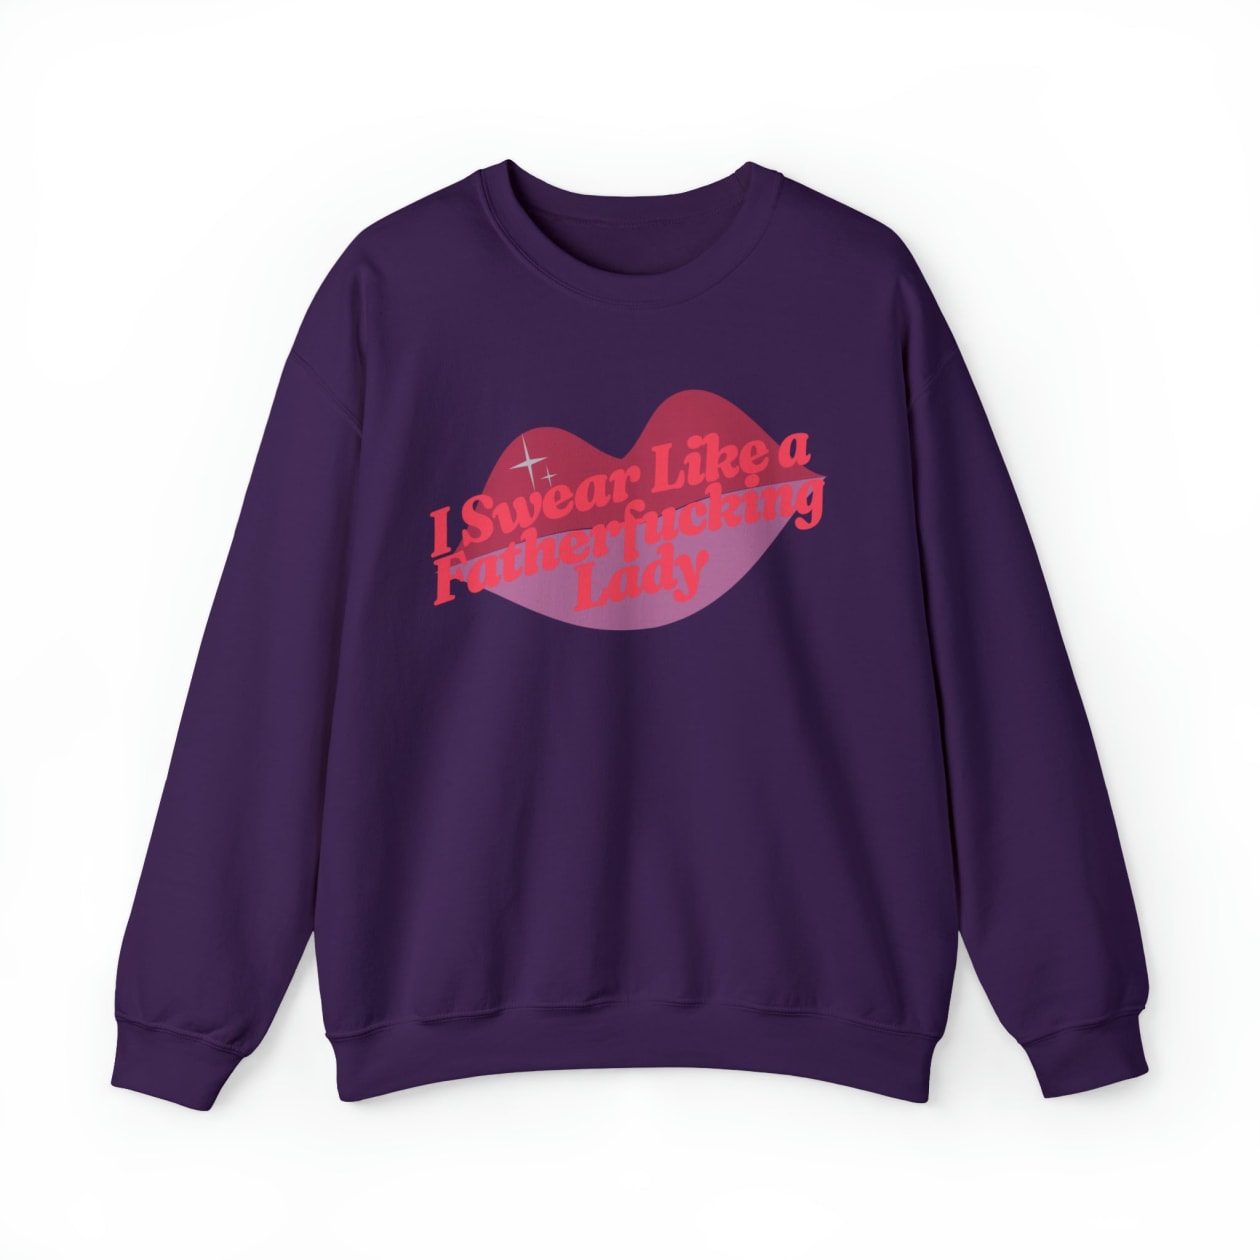 I Swear Like a Fatherfucking Lady Unisex Heavy Blend™ Crewneck Sweatshirt Sizes SM-5XL | Plus Size Available